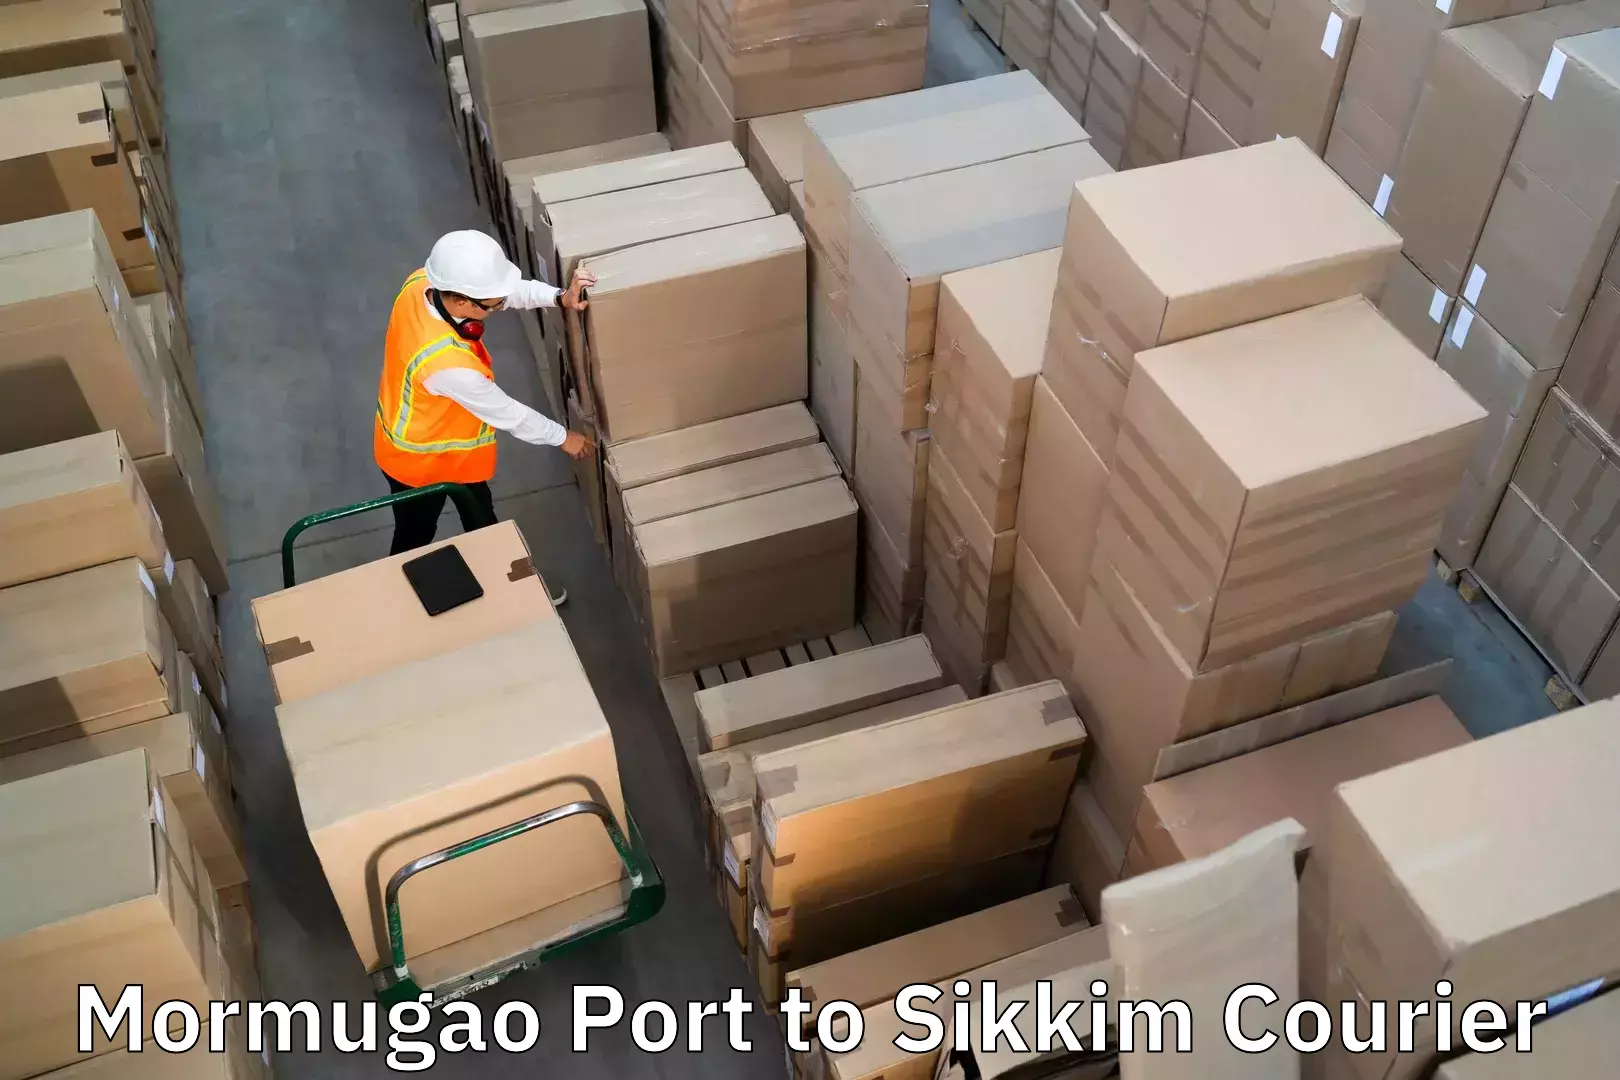 Luggage transport company Mormugao Port to South Sikkim